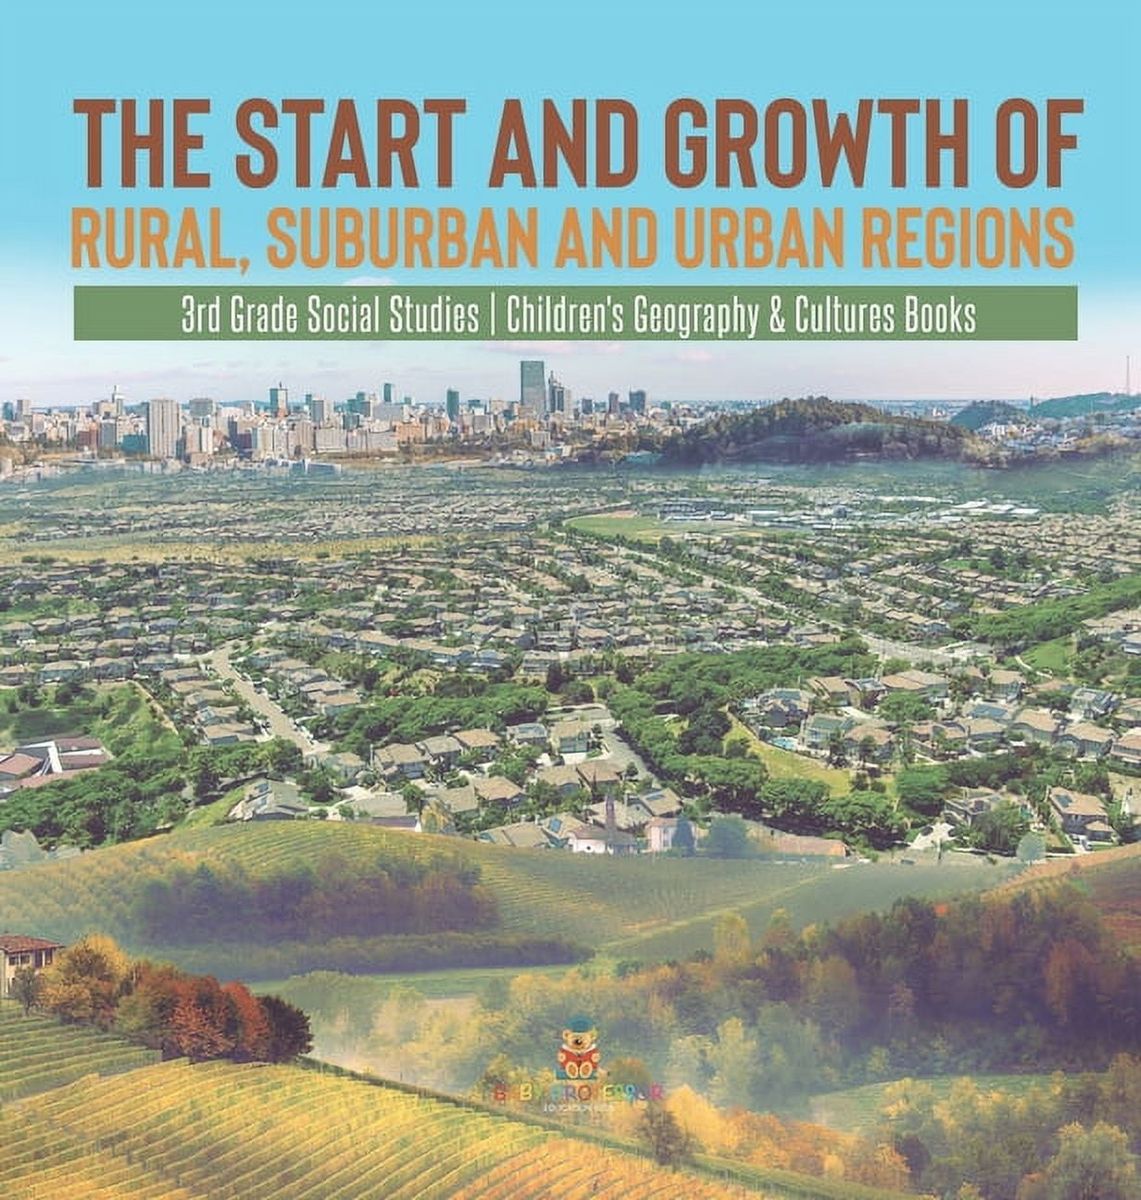 [RDY] [送料無料] 農村、郊外、都市地域の始まりと成長 3年生 社会科 児童 地理と文化の本 (ハードカバー) [楽天海外通販] | The Start and Growth of Rural, Suburban and Urban Regions 3rd Grade Social Studies Childre